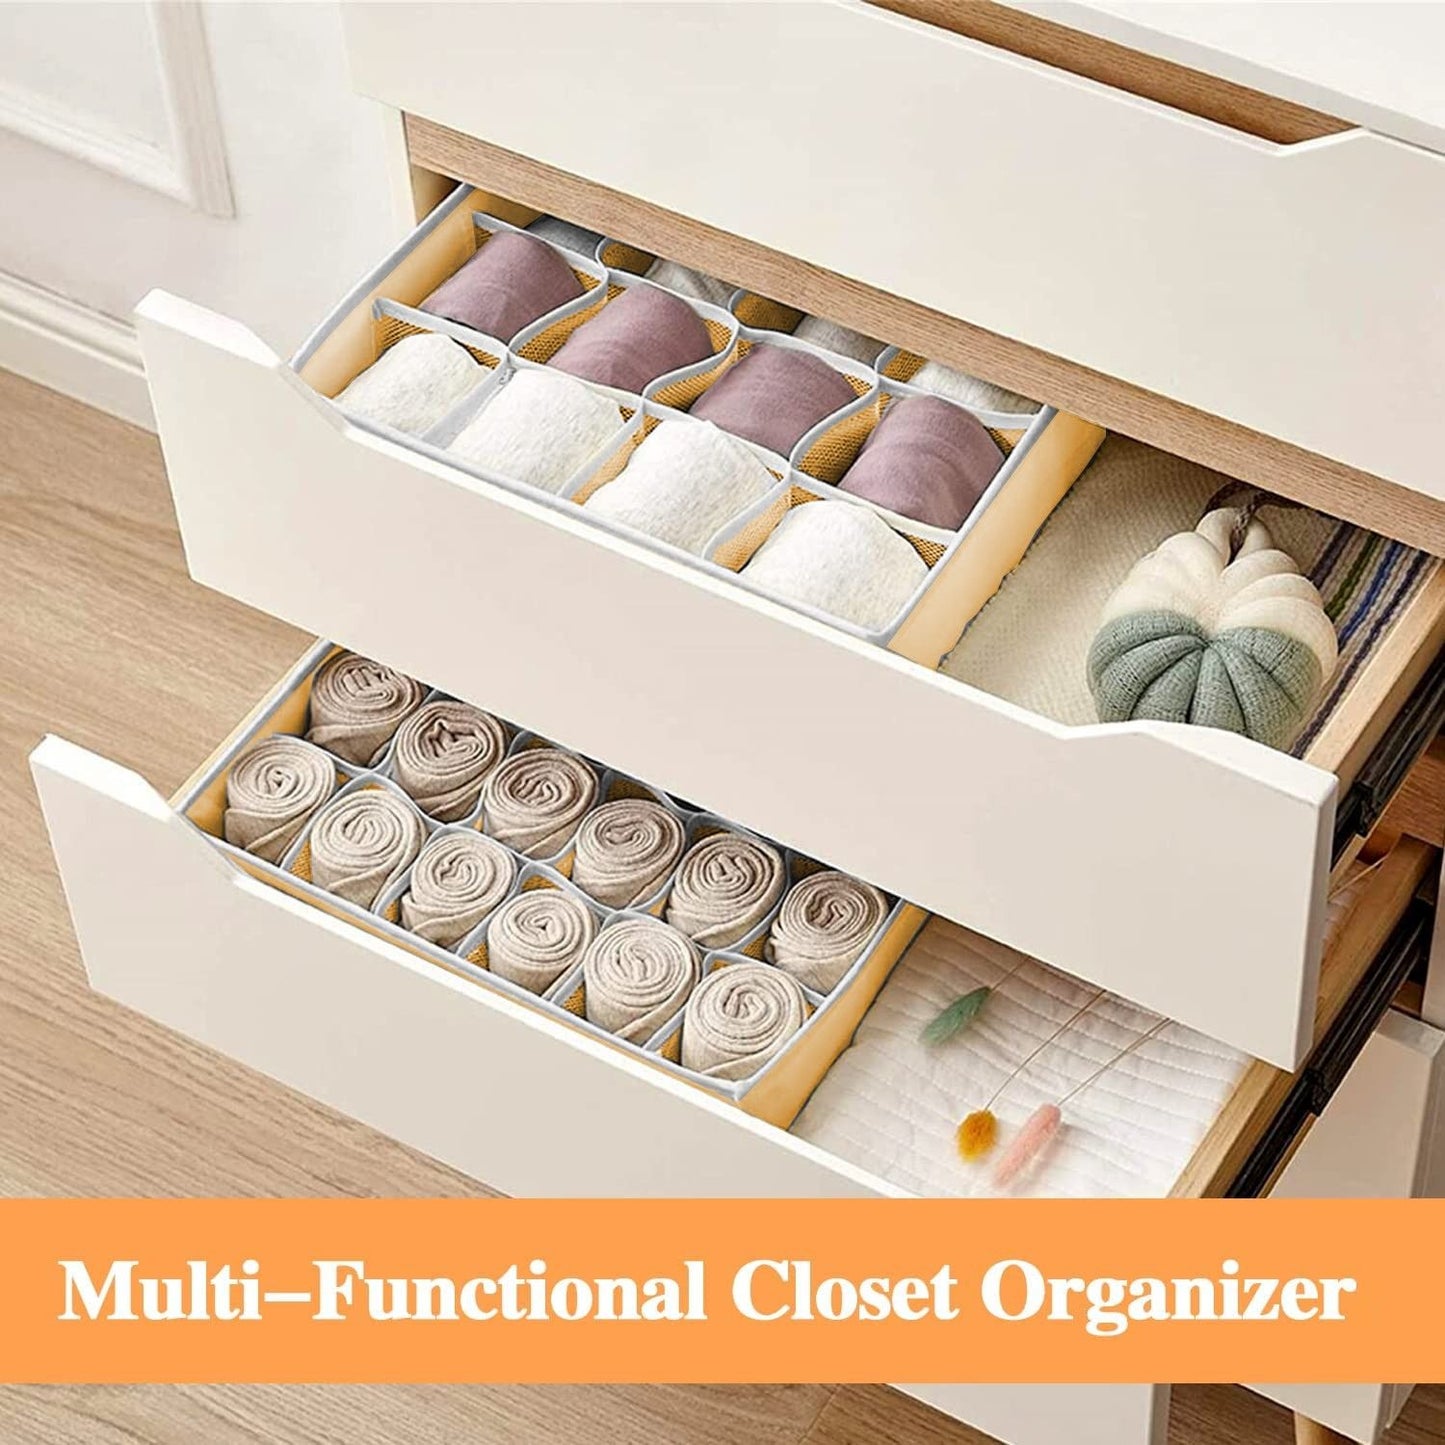 Set of 2 Fabric Drawer Organizer Divider Storage Boxes for Storing Socks, Underwear, Ties, Scarves - Beige